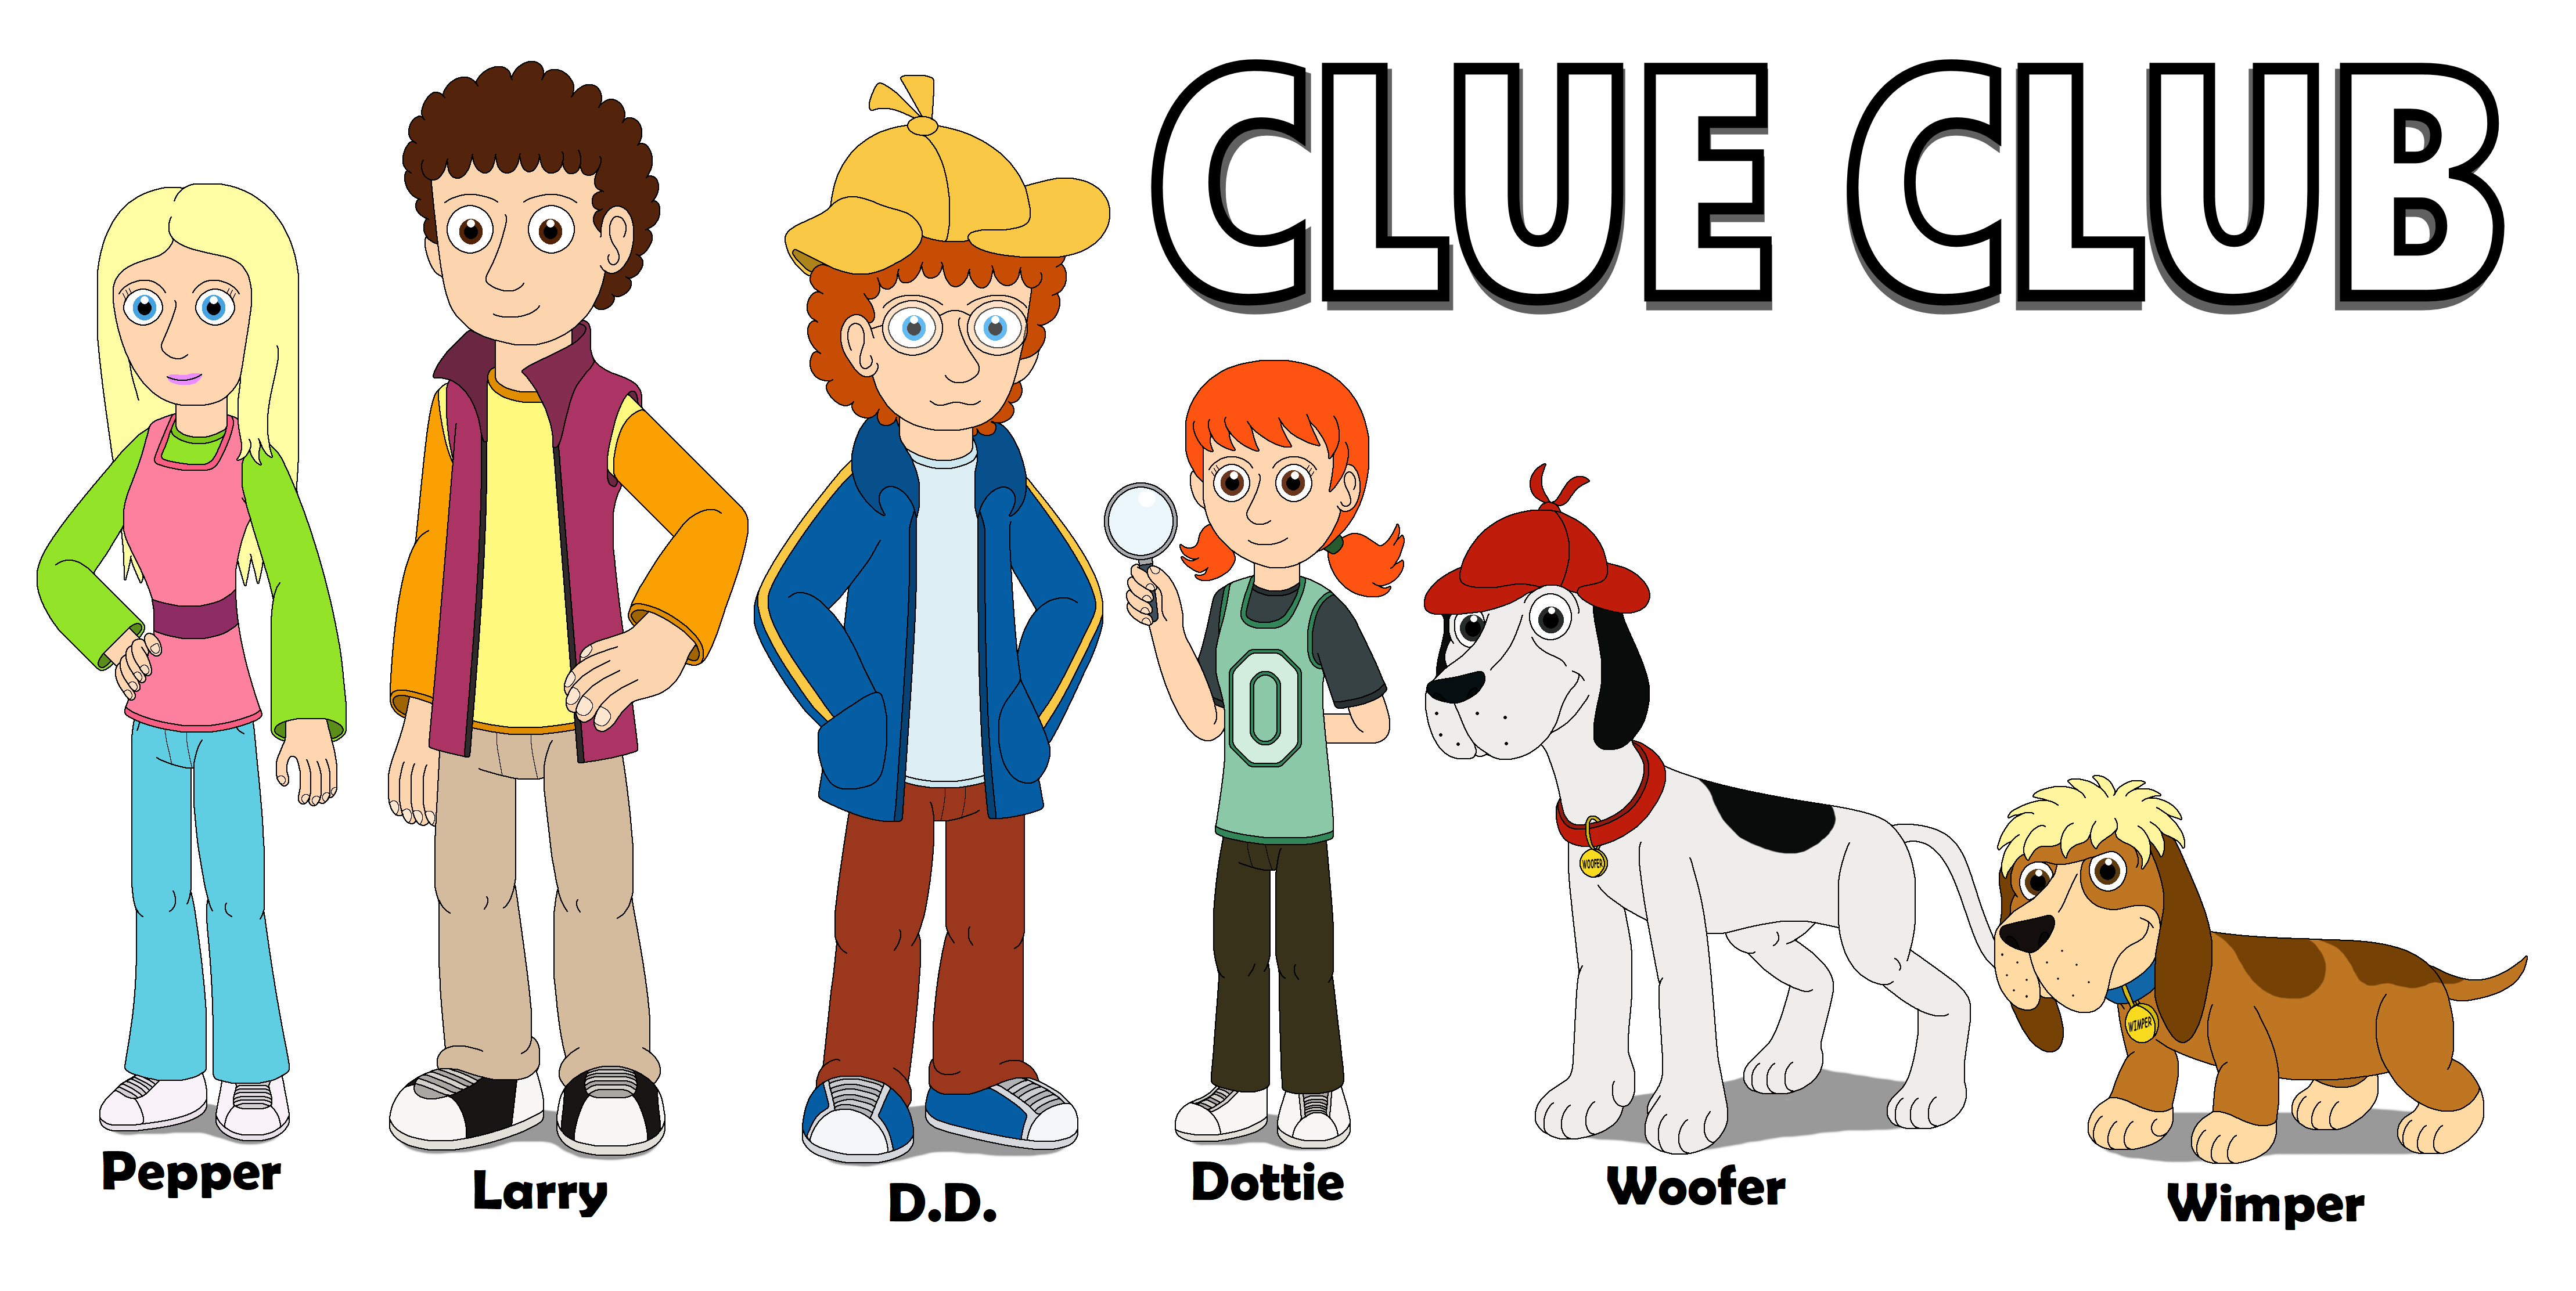 Clue Club by MCsaurus on DeviantArt